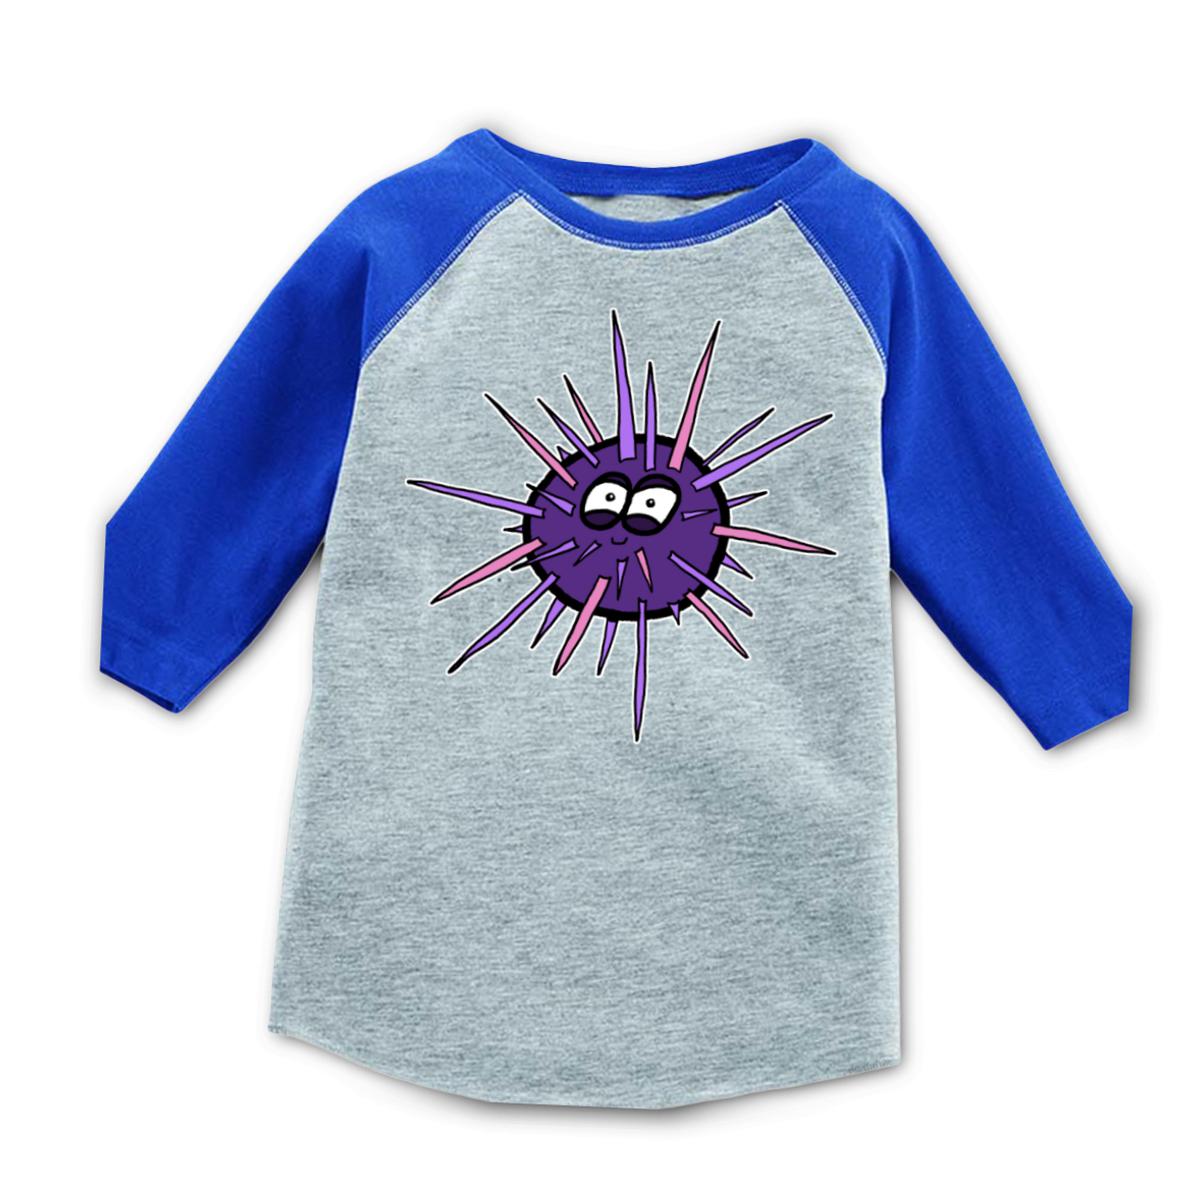 Sea Urchin Toddler Raglan Tee 4T heather-royal